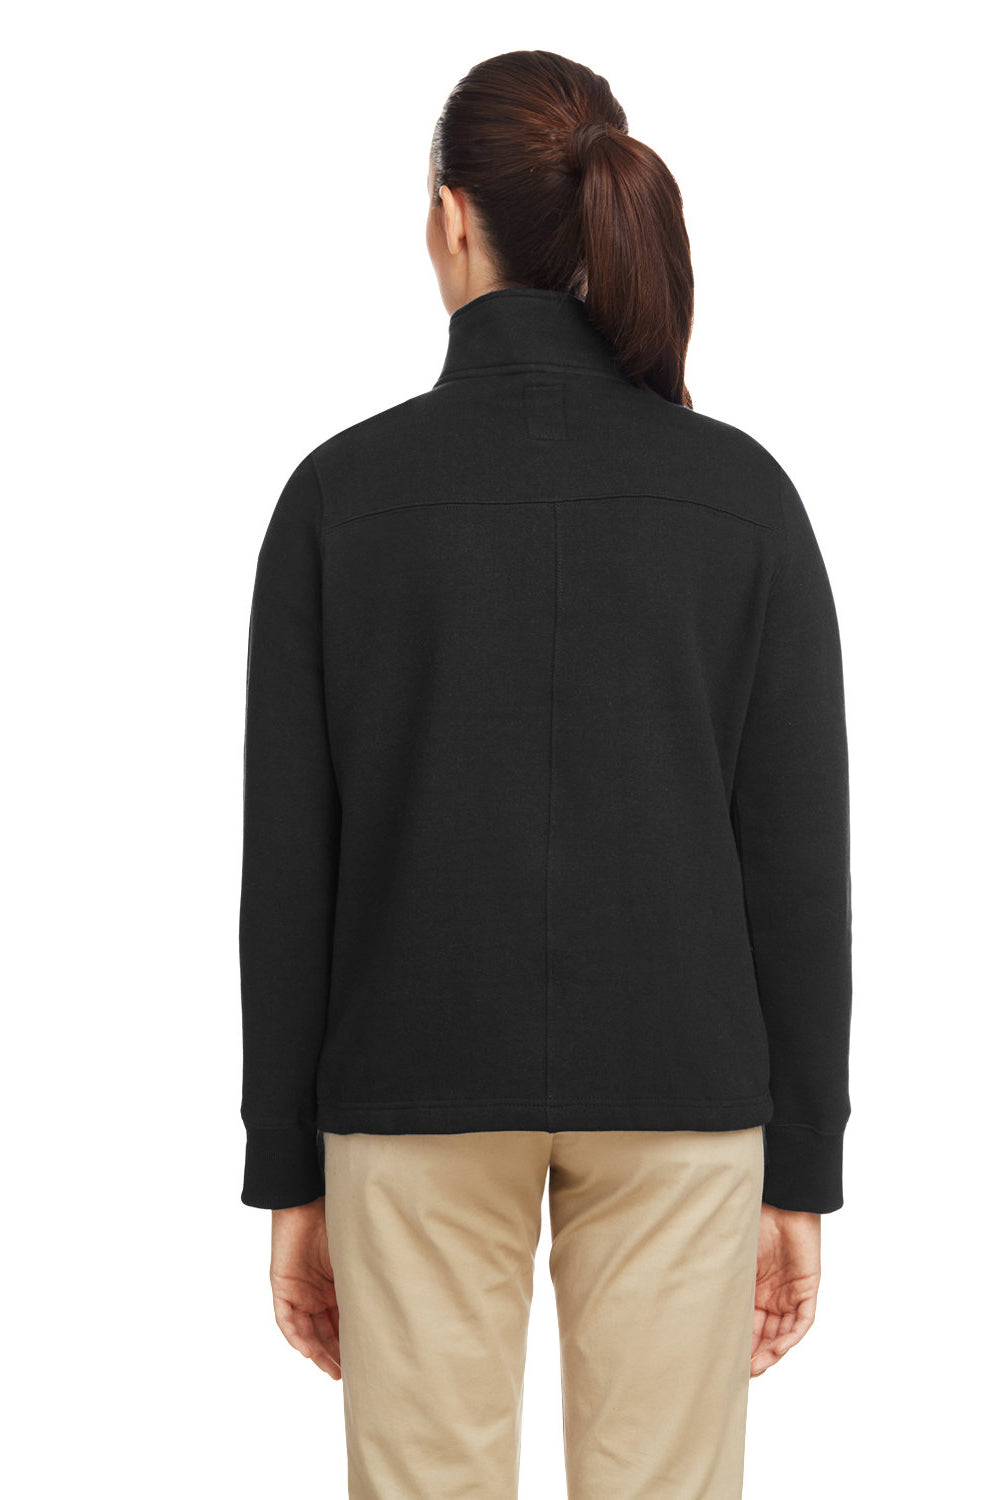 Nautica N17397 Womens Anchor Fleece 1/4 Zip Sweatshirt Black Back